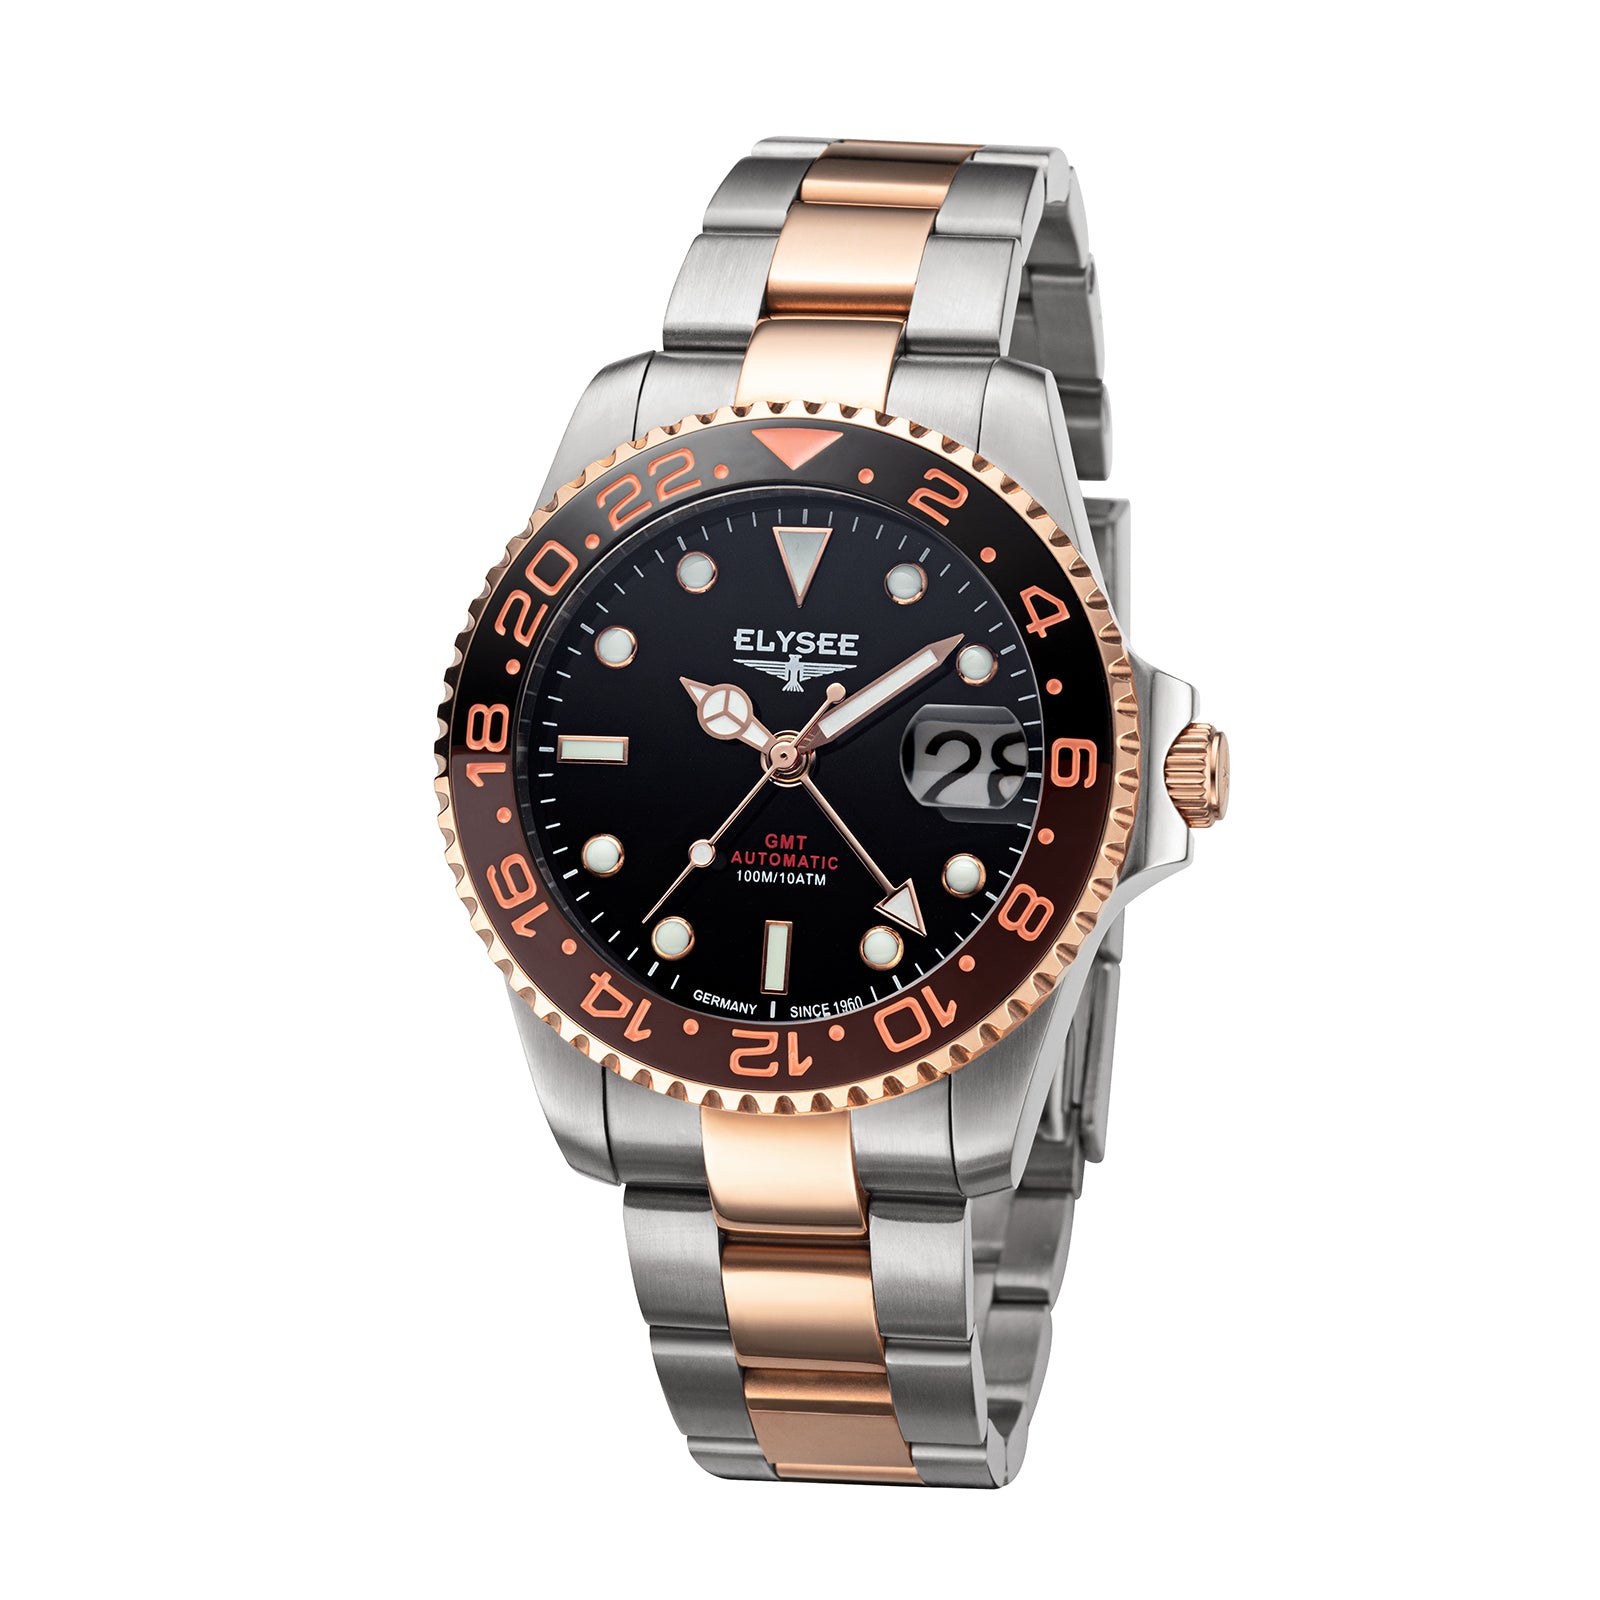 GMT Pro Ceramic – 80590 - Elysee - Elysee Watches Uhren